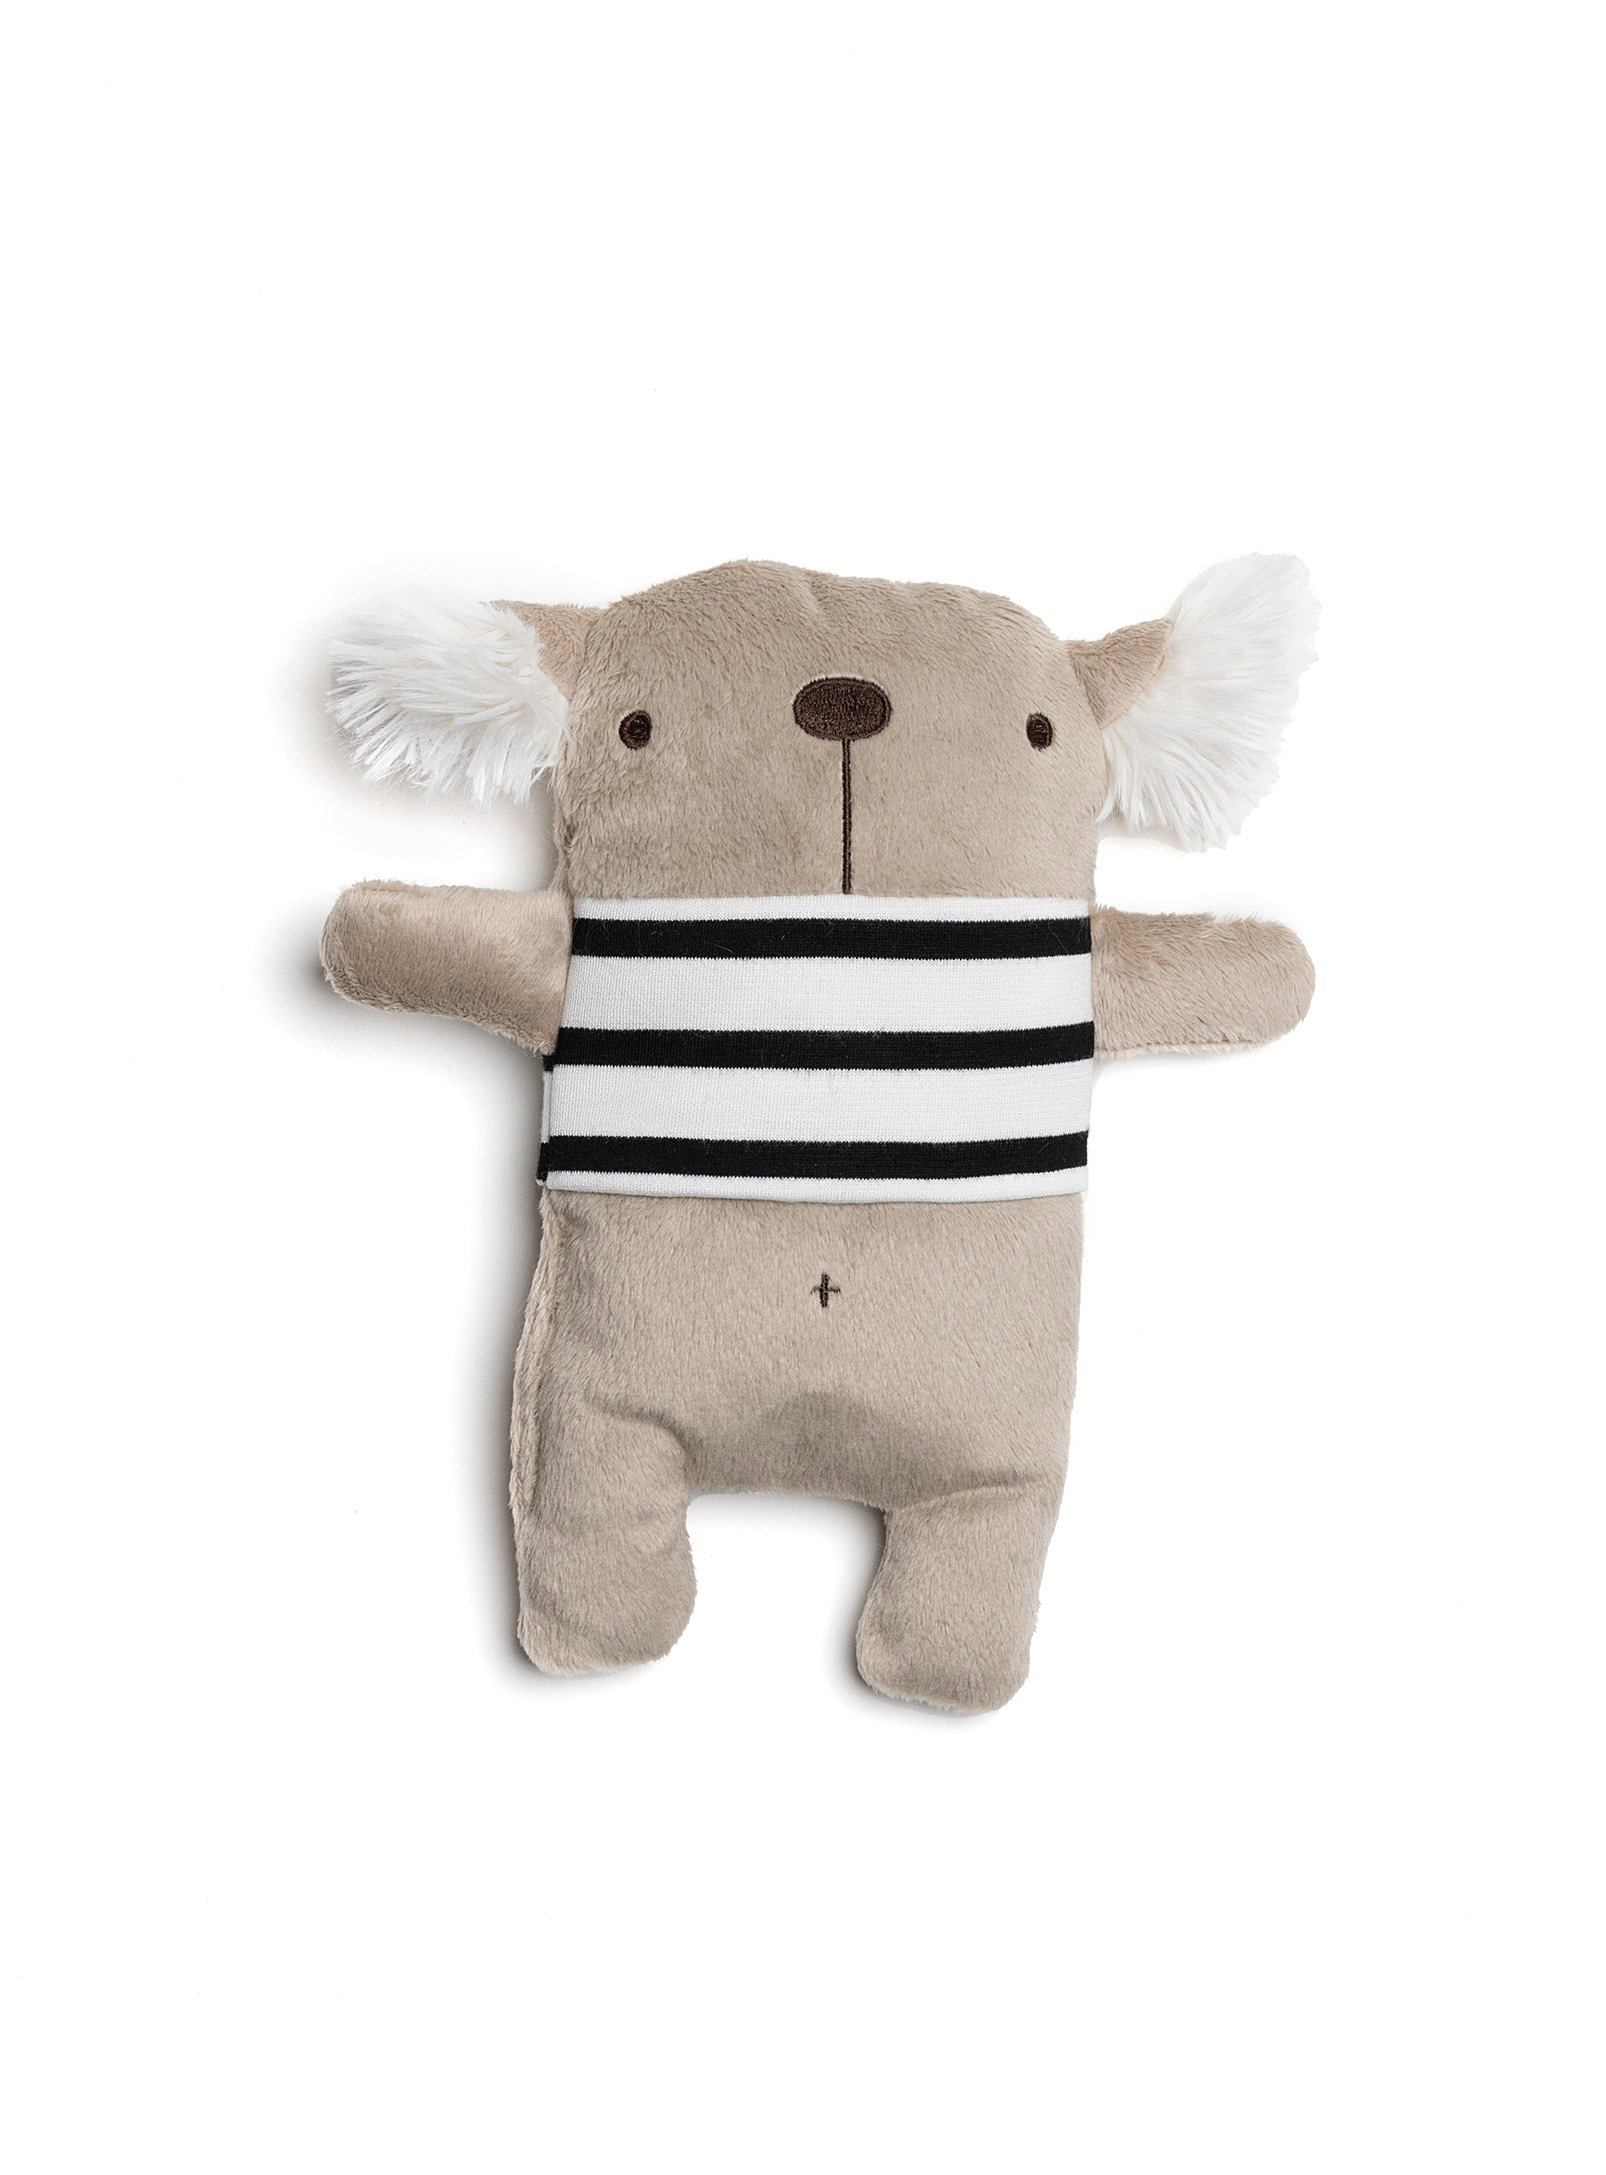 Raplapla - Gilles le koala plush toy